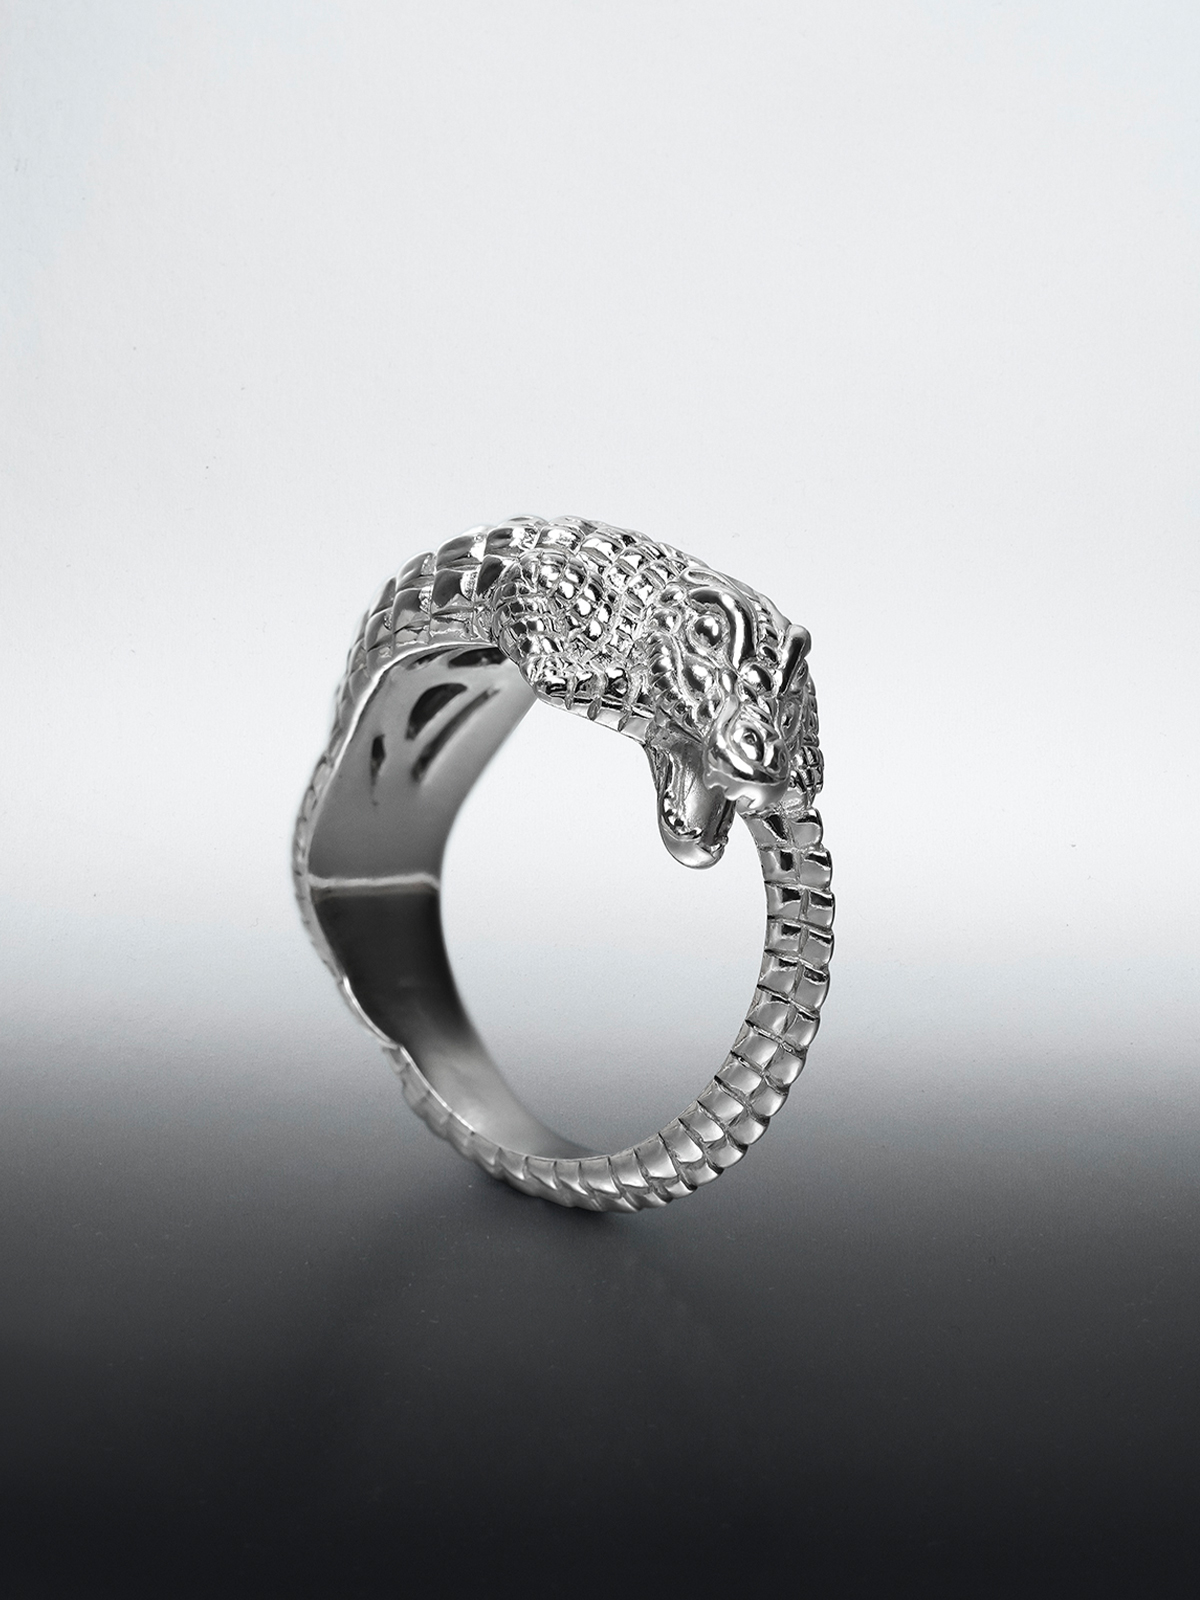 925 silver ring shaped like crocodile